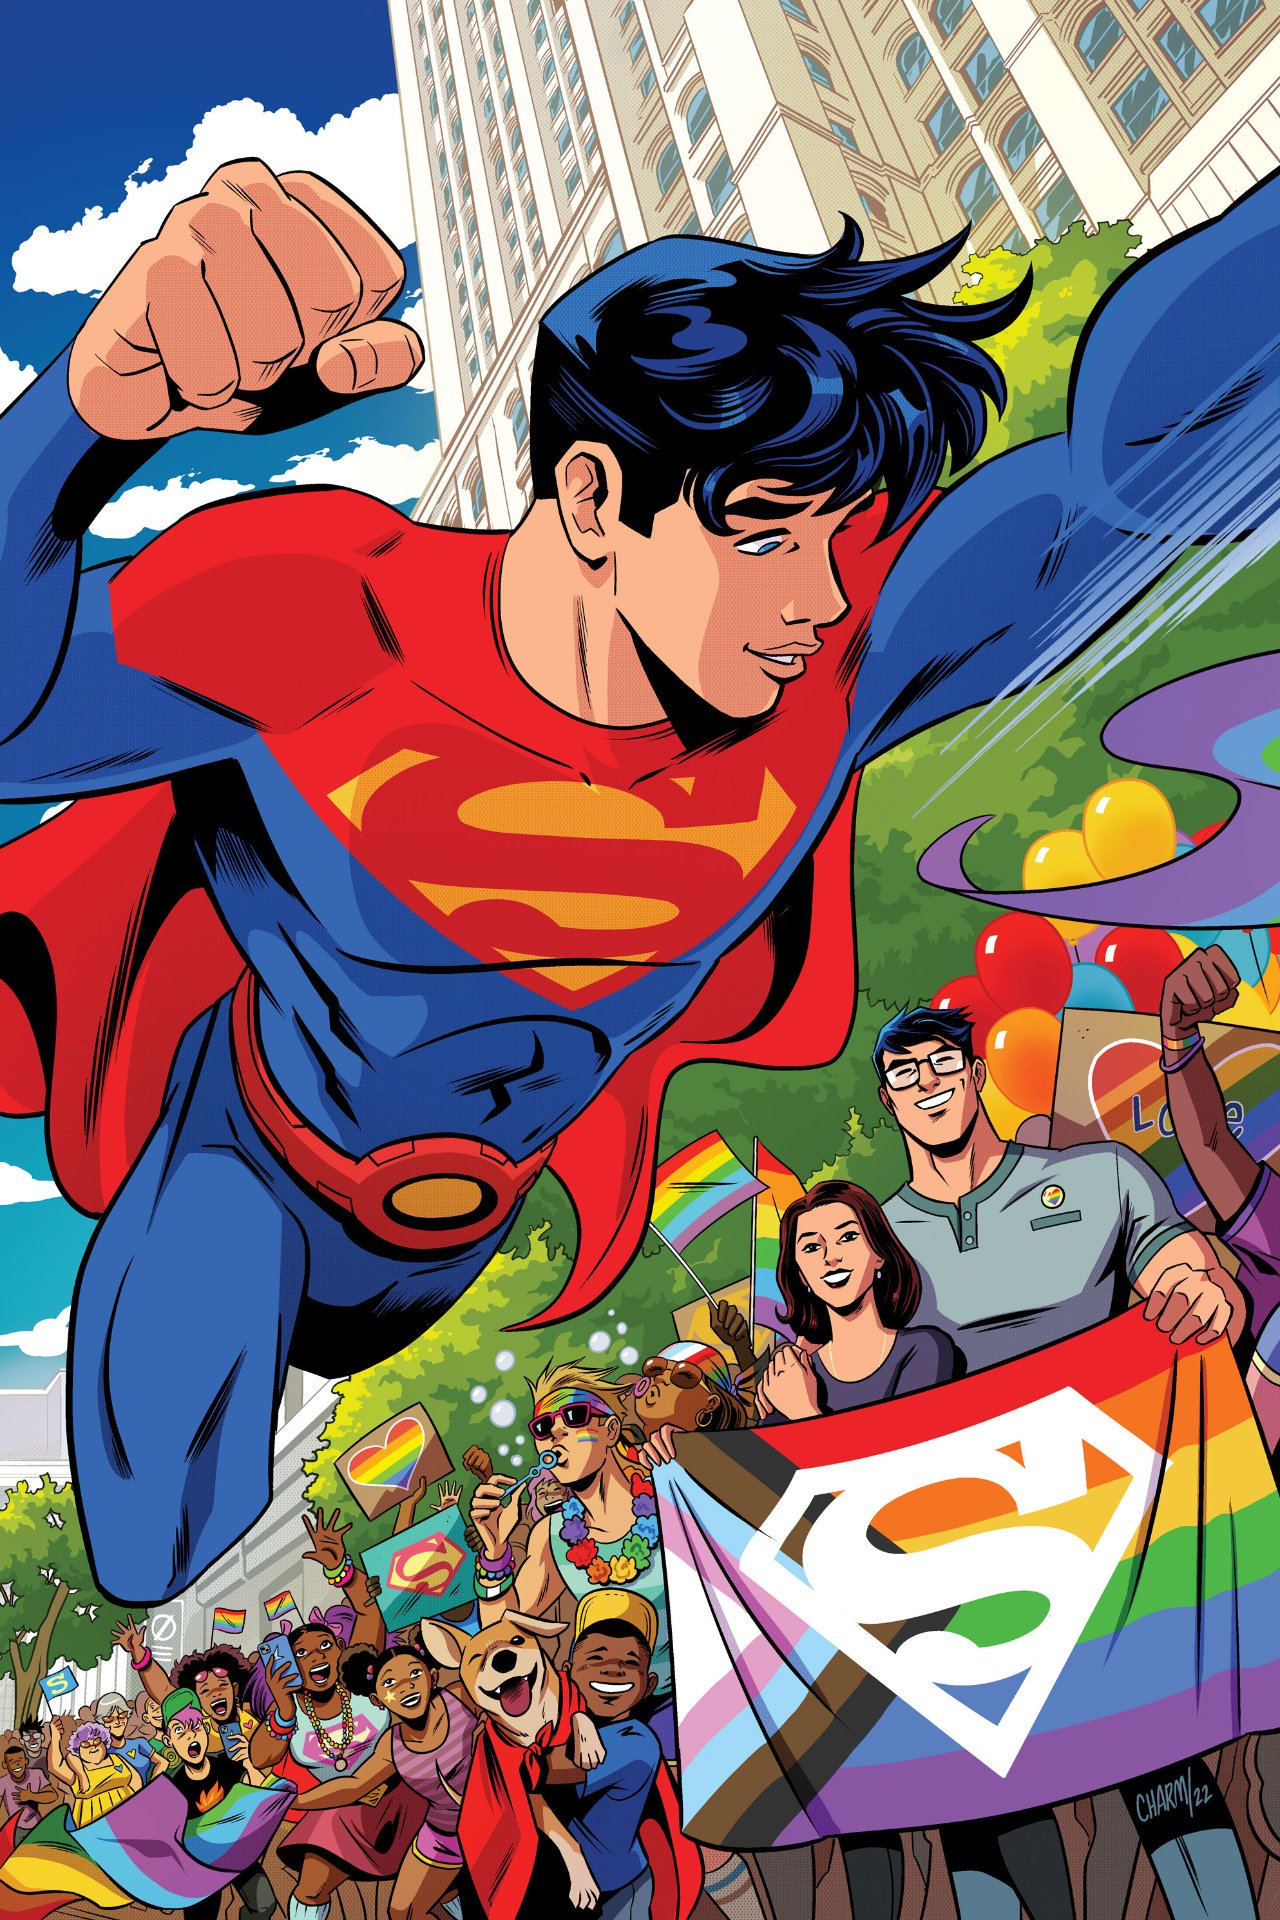 Amy Reeder (Batman Nr. 124), David Talaski (Superman: Son of Kal-El Nr. 12), Derek Charm (Action Comics Nr. 1044), Joe Phillips (Aquamen Nr. 5), Kevin Wada (Nubia: Queen of the Amazons Nr. 1 ), Kris Anka (Poison Ivy #1), Nick Robles (Nightwing #93), Nicole Goux (Wonder Woman #788), Olivier Coipel (Harley Quinn #16), Stephen Byrne (Multiversity: Teen Justice #1) und mehr .